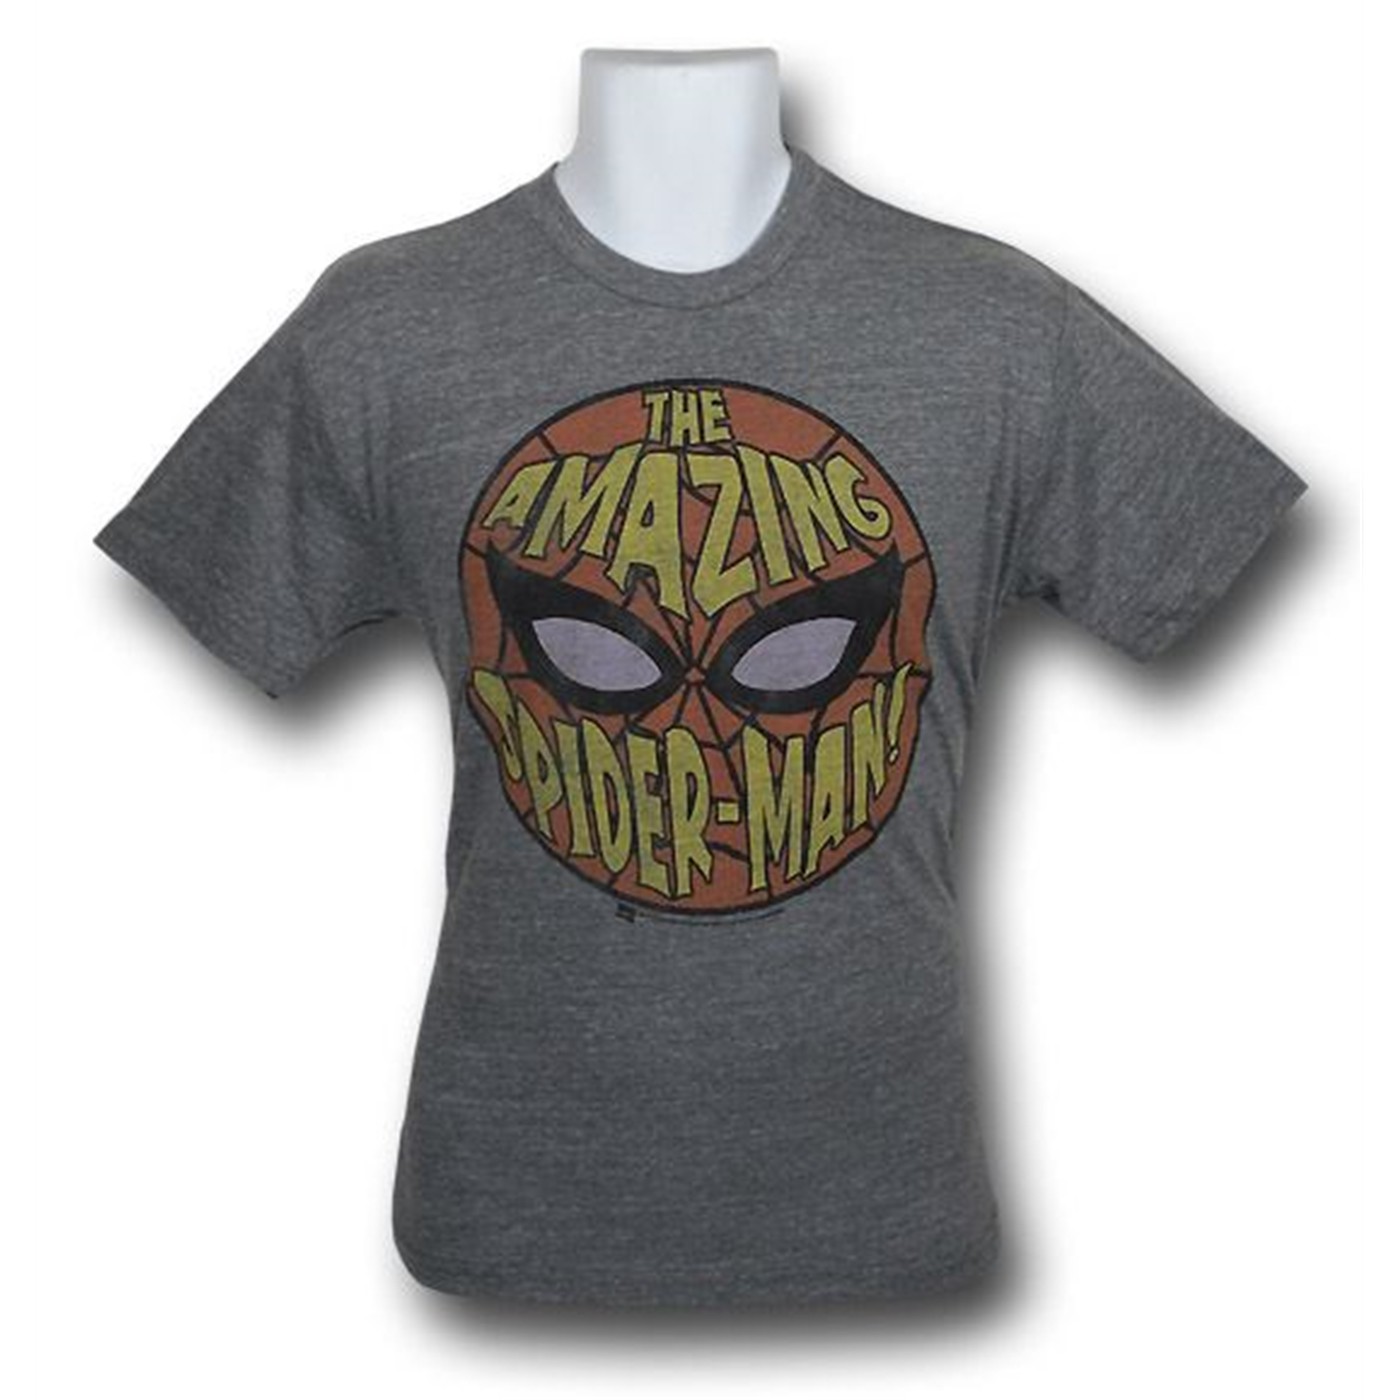 Spiderman The Amazing Junk Food T-Shirt